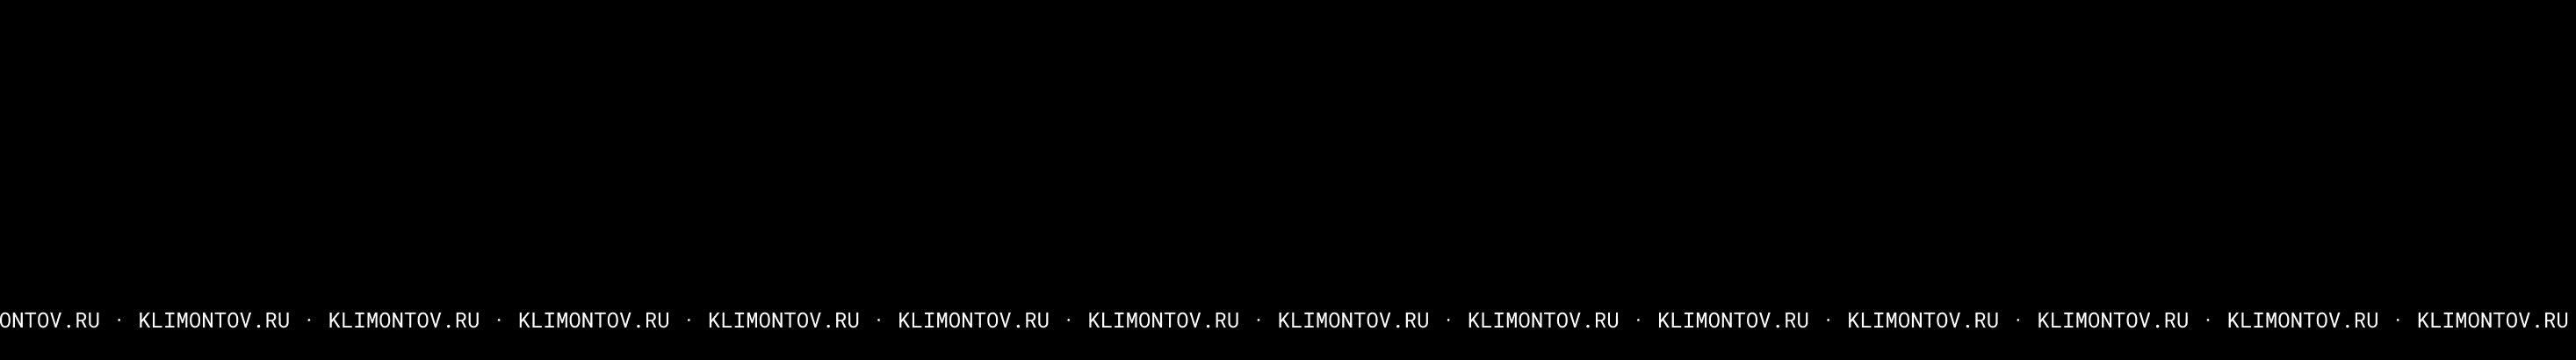 Денис Климонтов profil başlığı